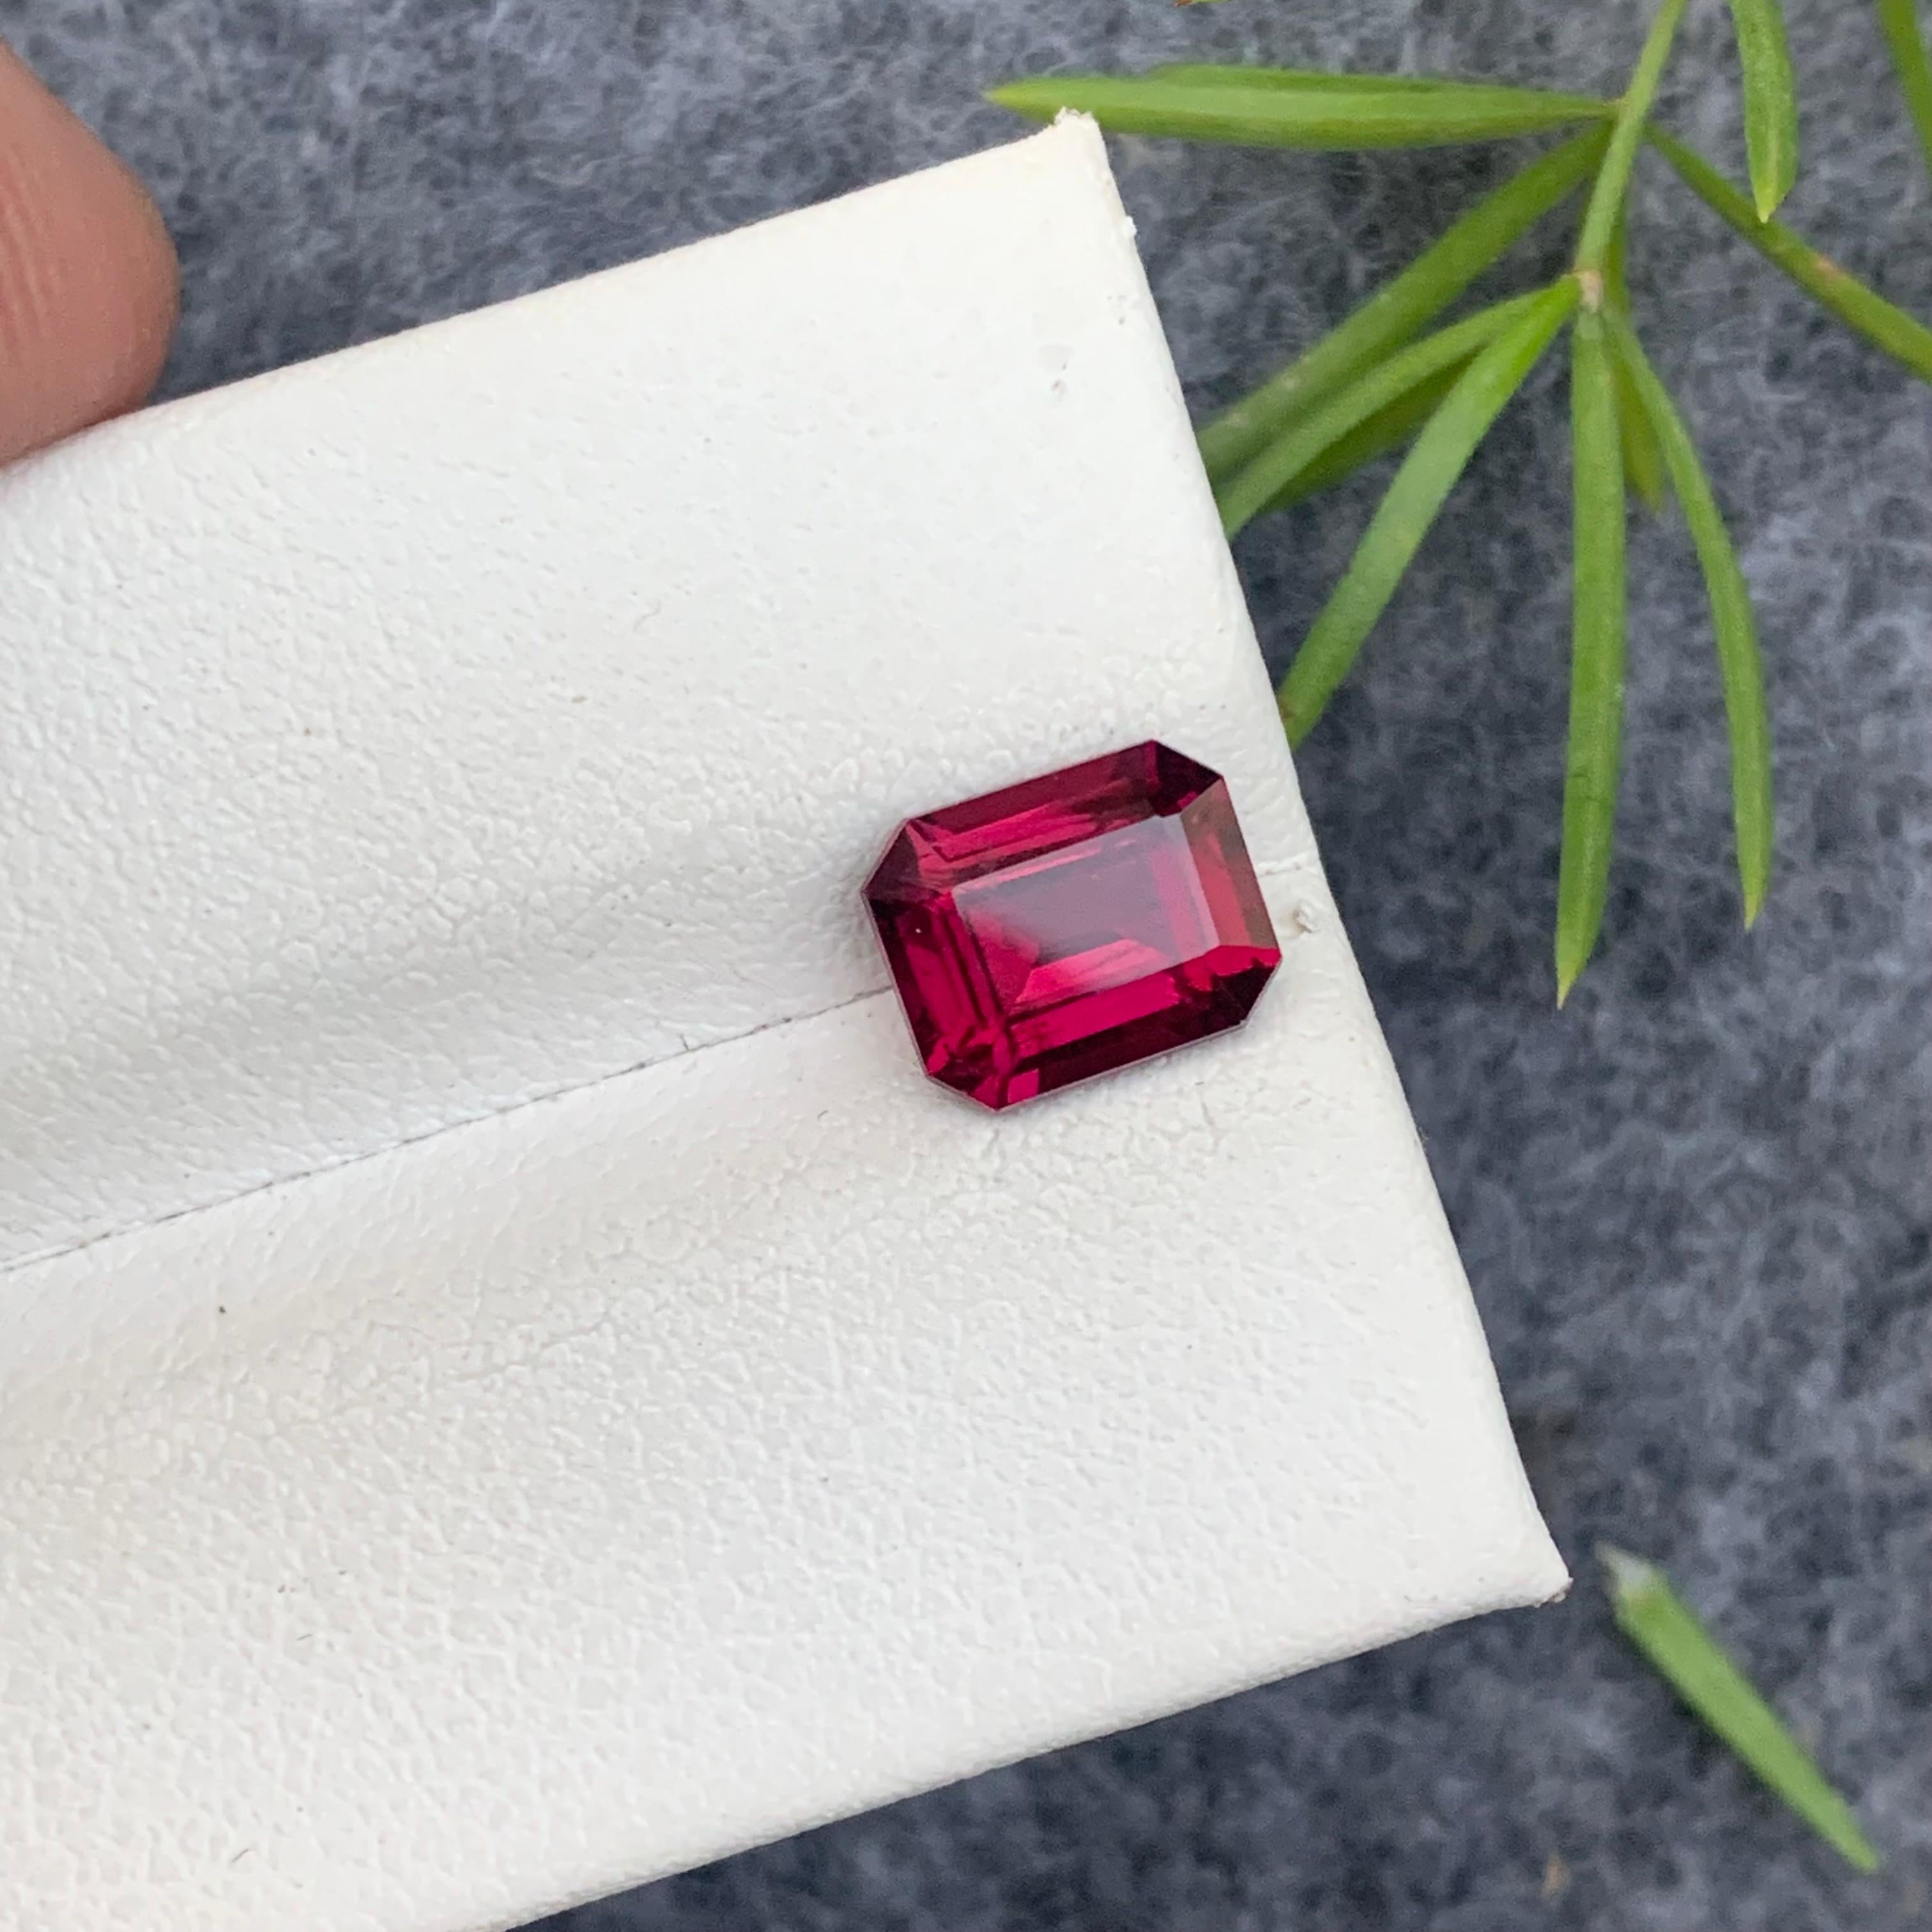 Taille émeraude 2.10 Carat Natural Loose Pinkish Red Rhodolite Garnet Emerald Cut Gemstone (pierre précieuse de taille émeraude) en vente